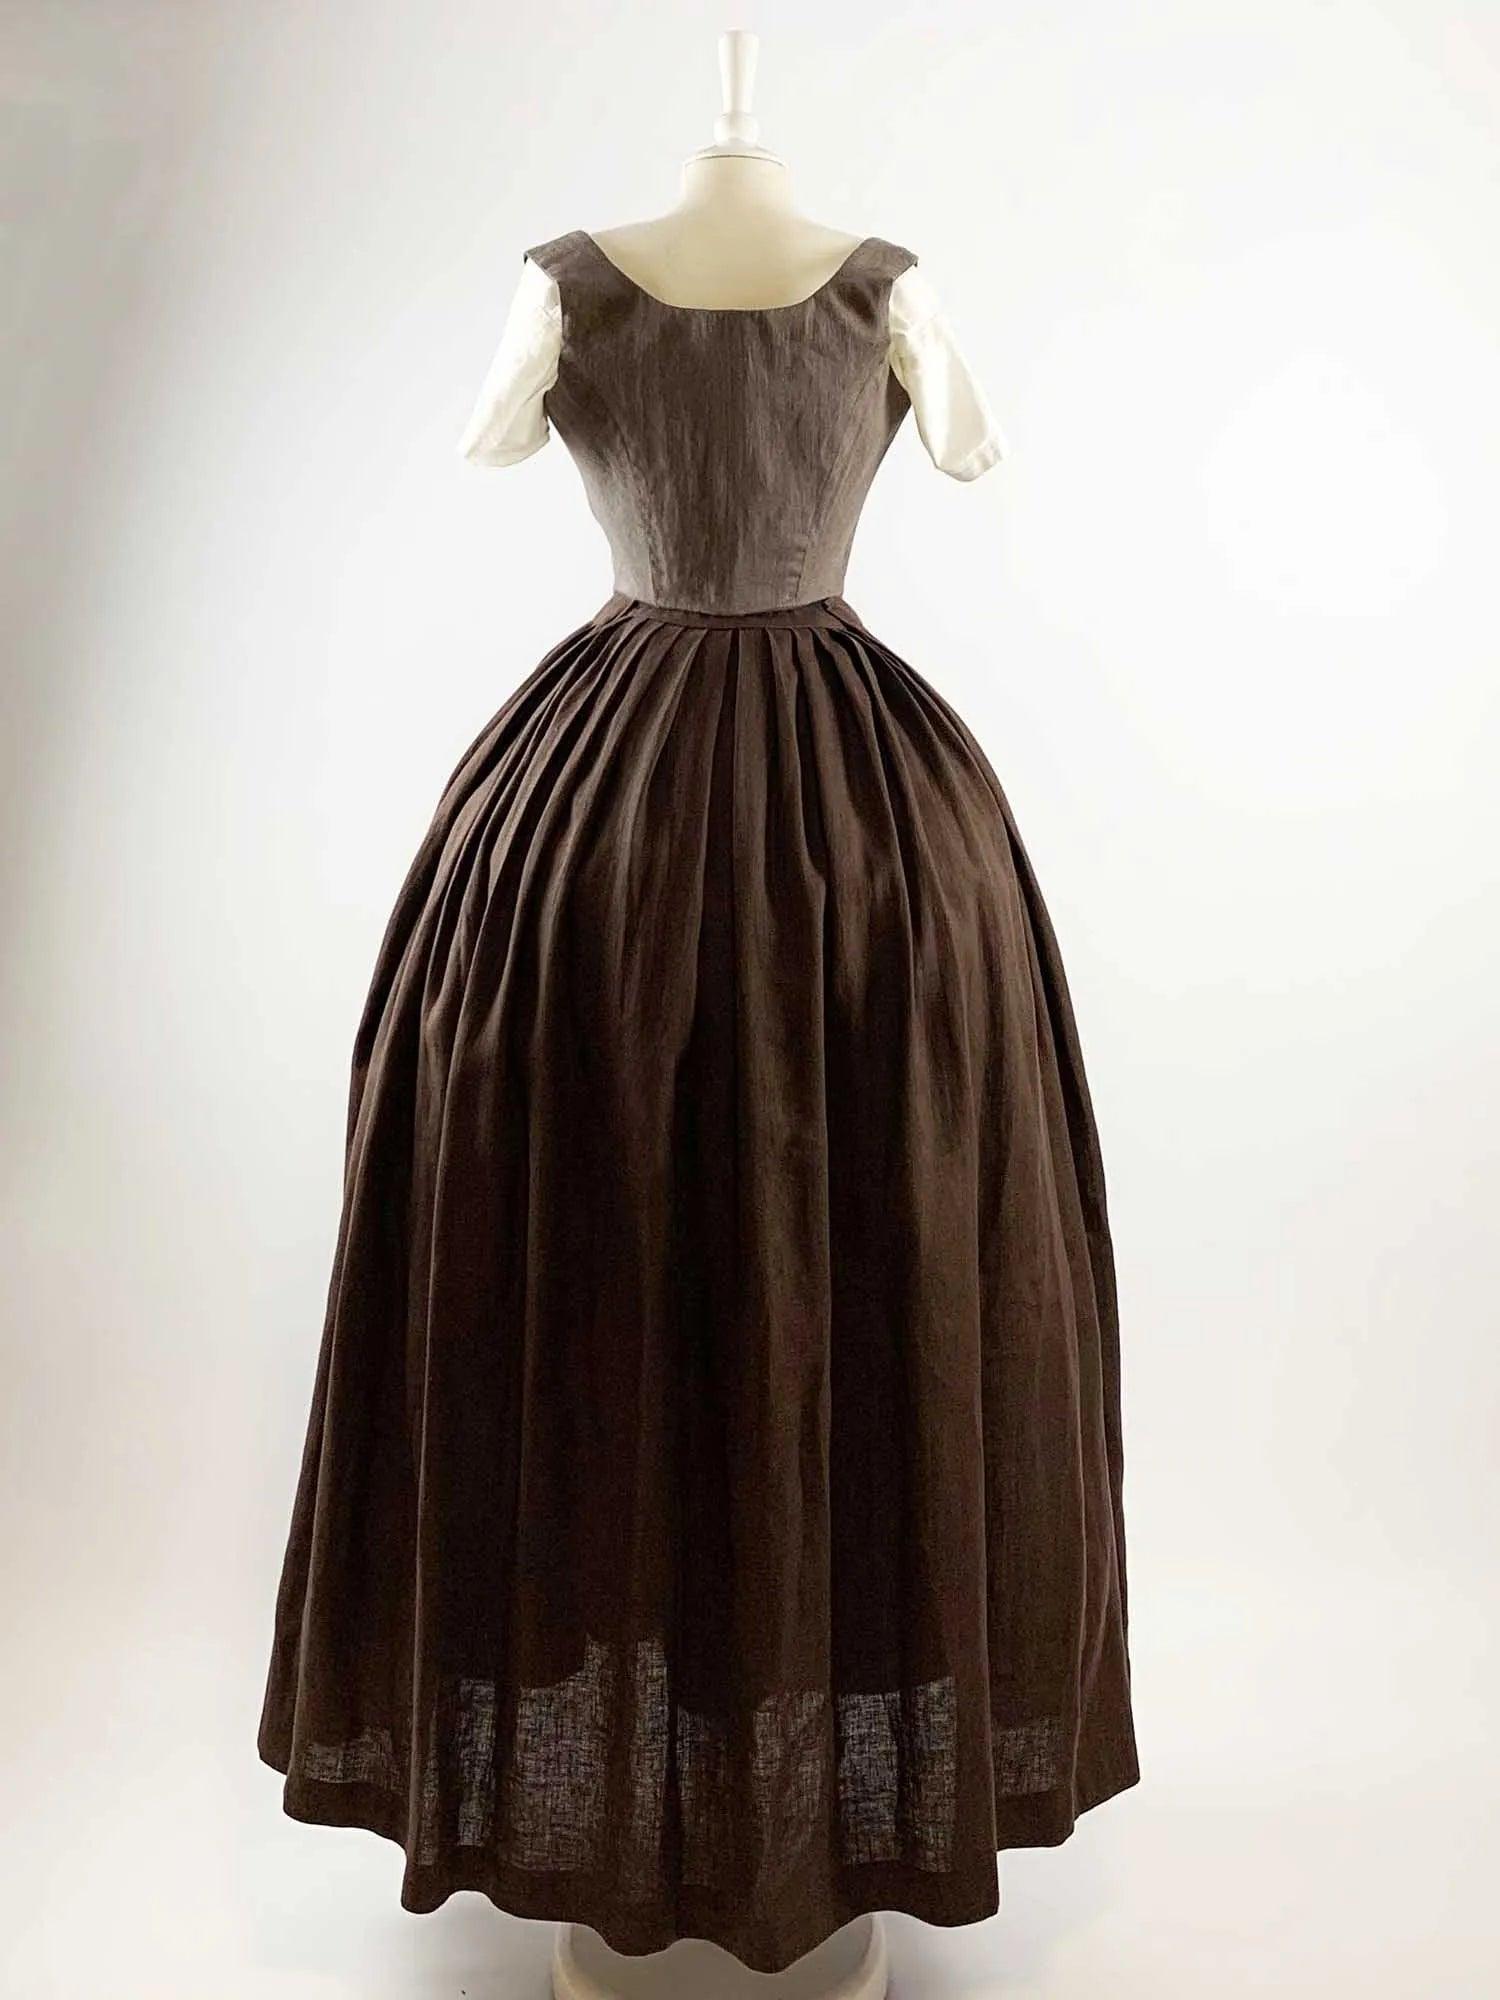 ISOLDE, Renaissance Costume in Brown Gray &amp; Chocolate Linen - Atelier Serraspina - Costume Renaissance en Lin Marron-Gris &amp; Chocolat